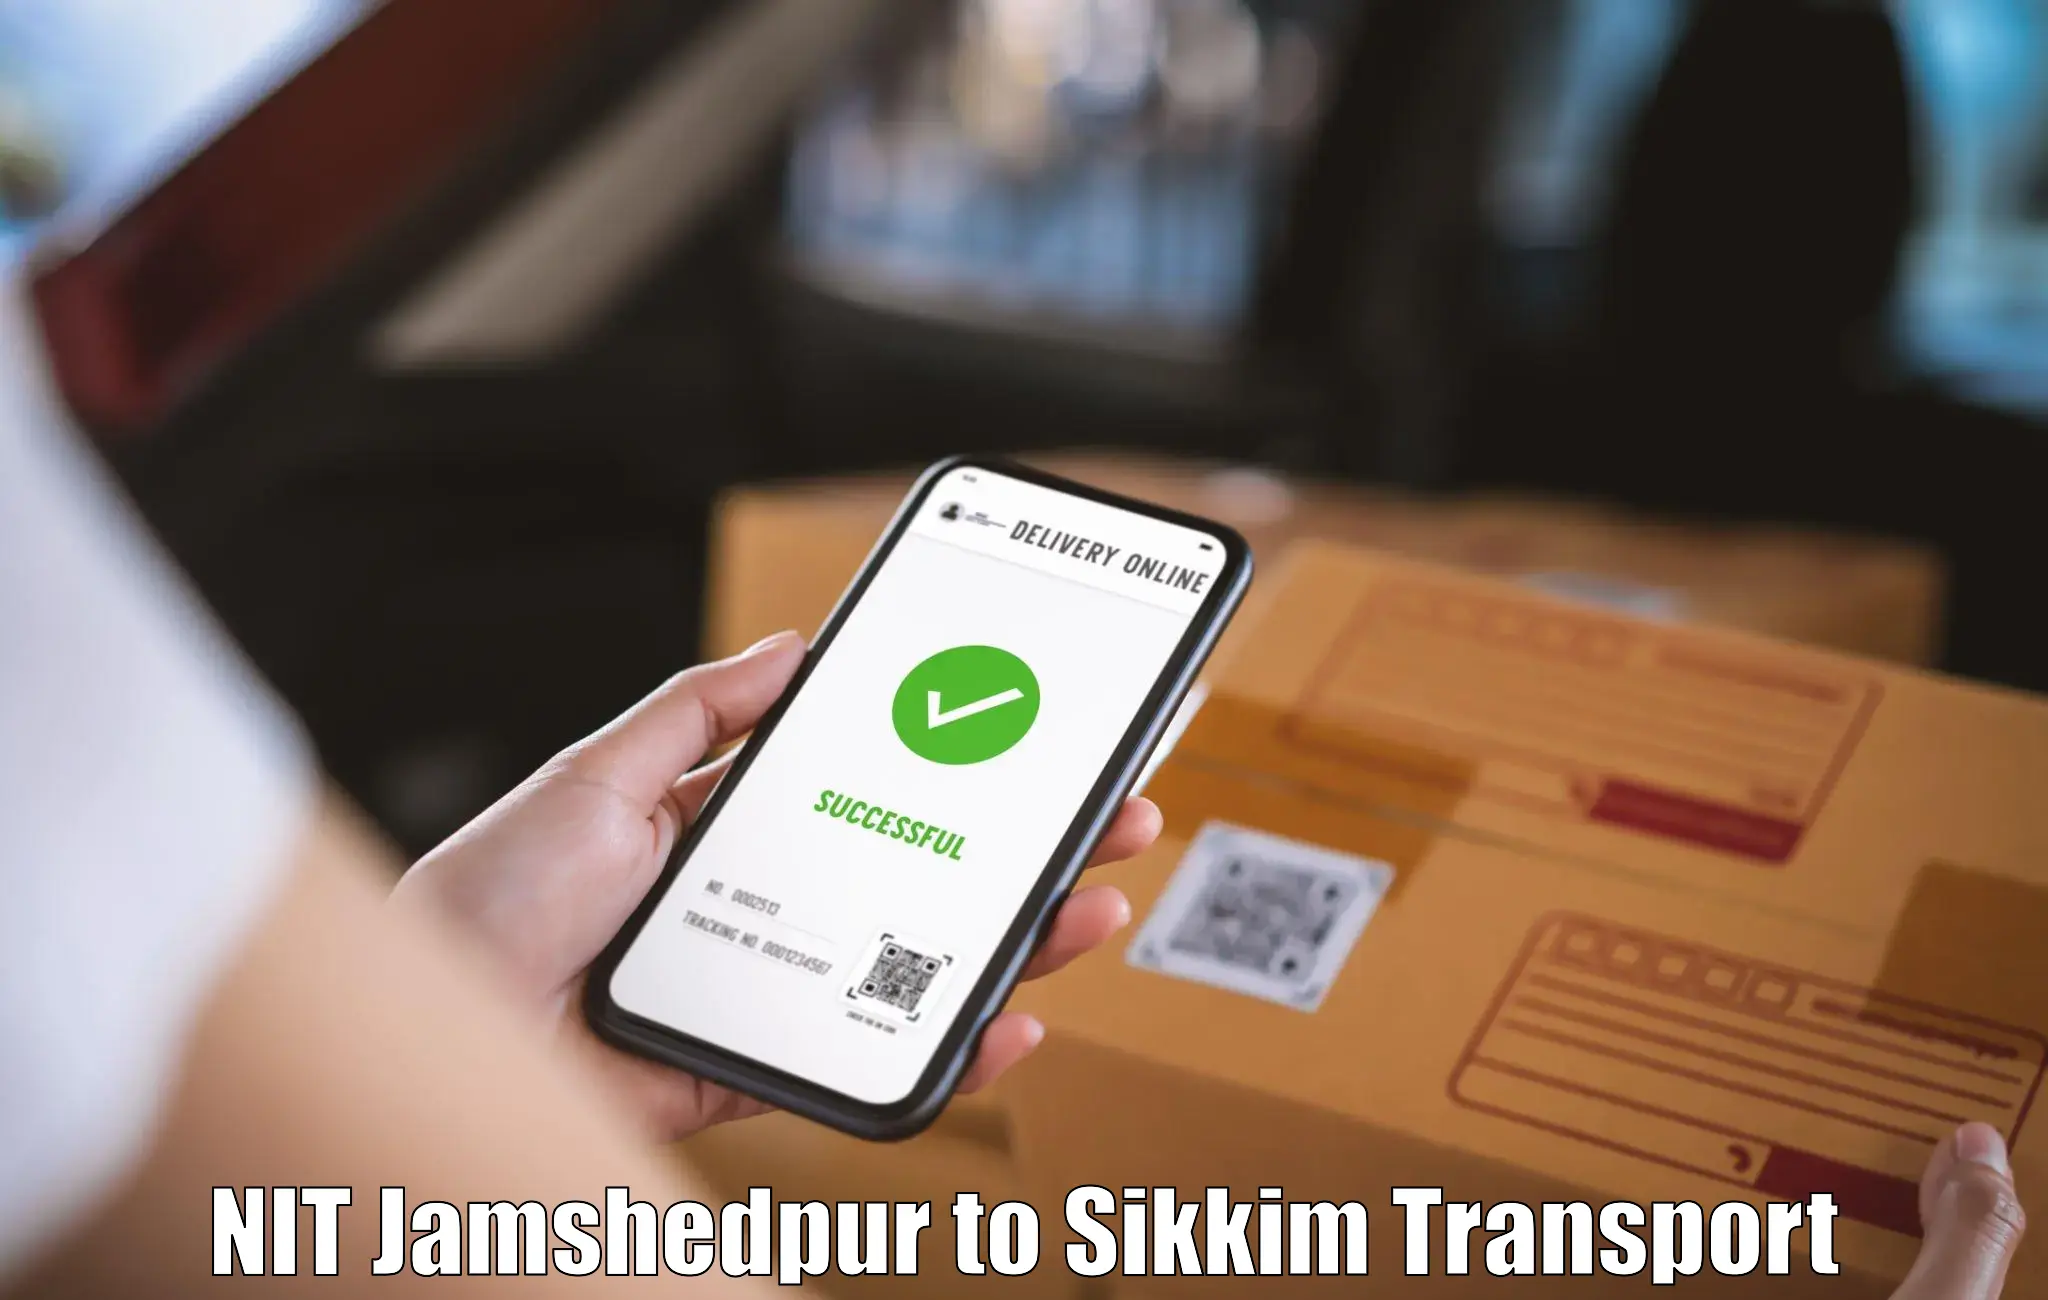 Transport in sharing NIT Jamshedpur to NIT Sikkim